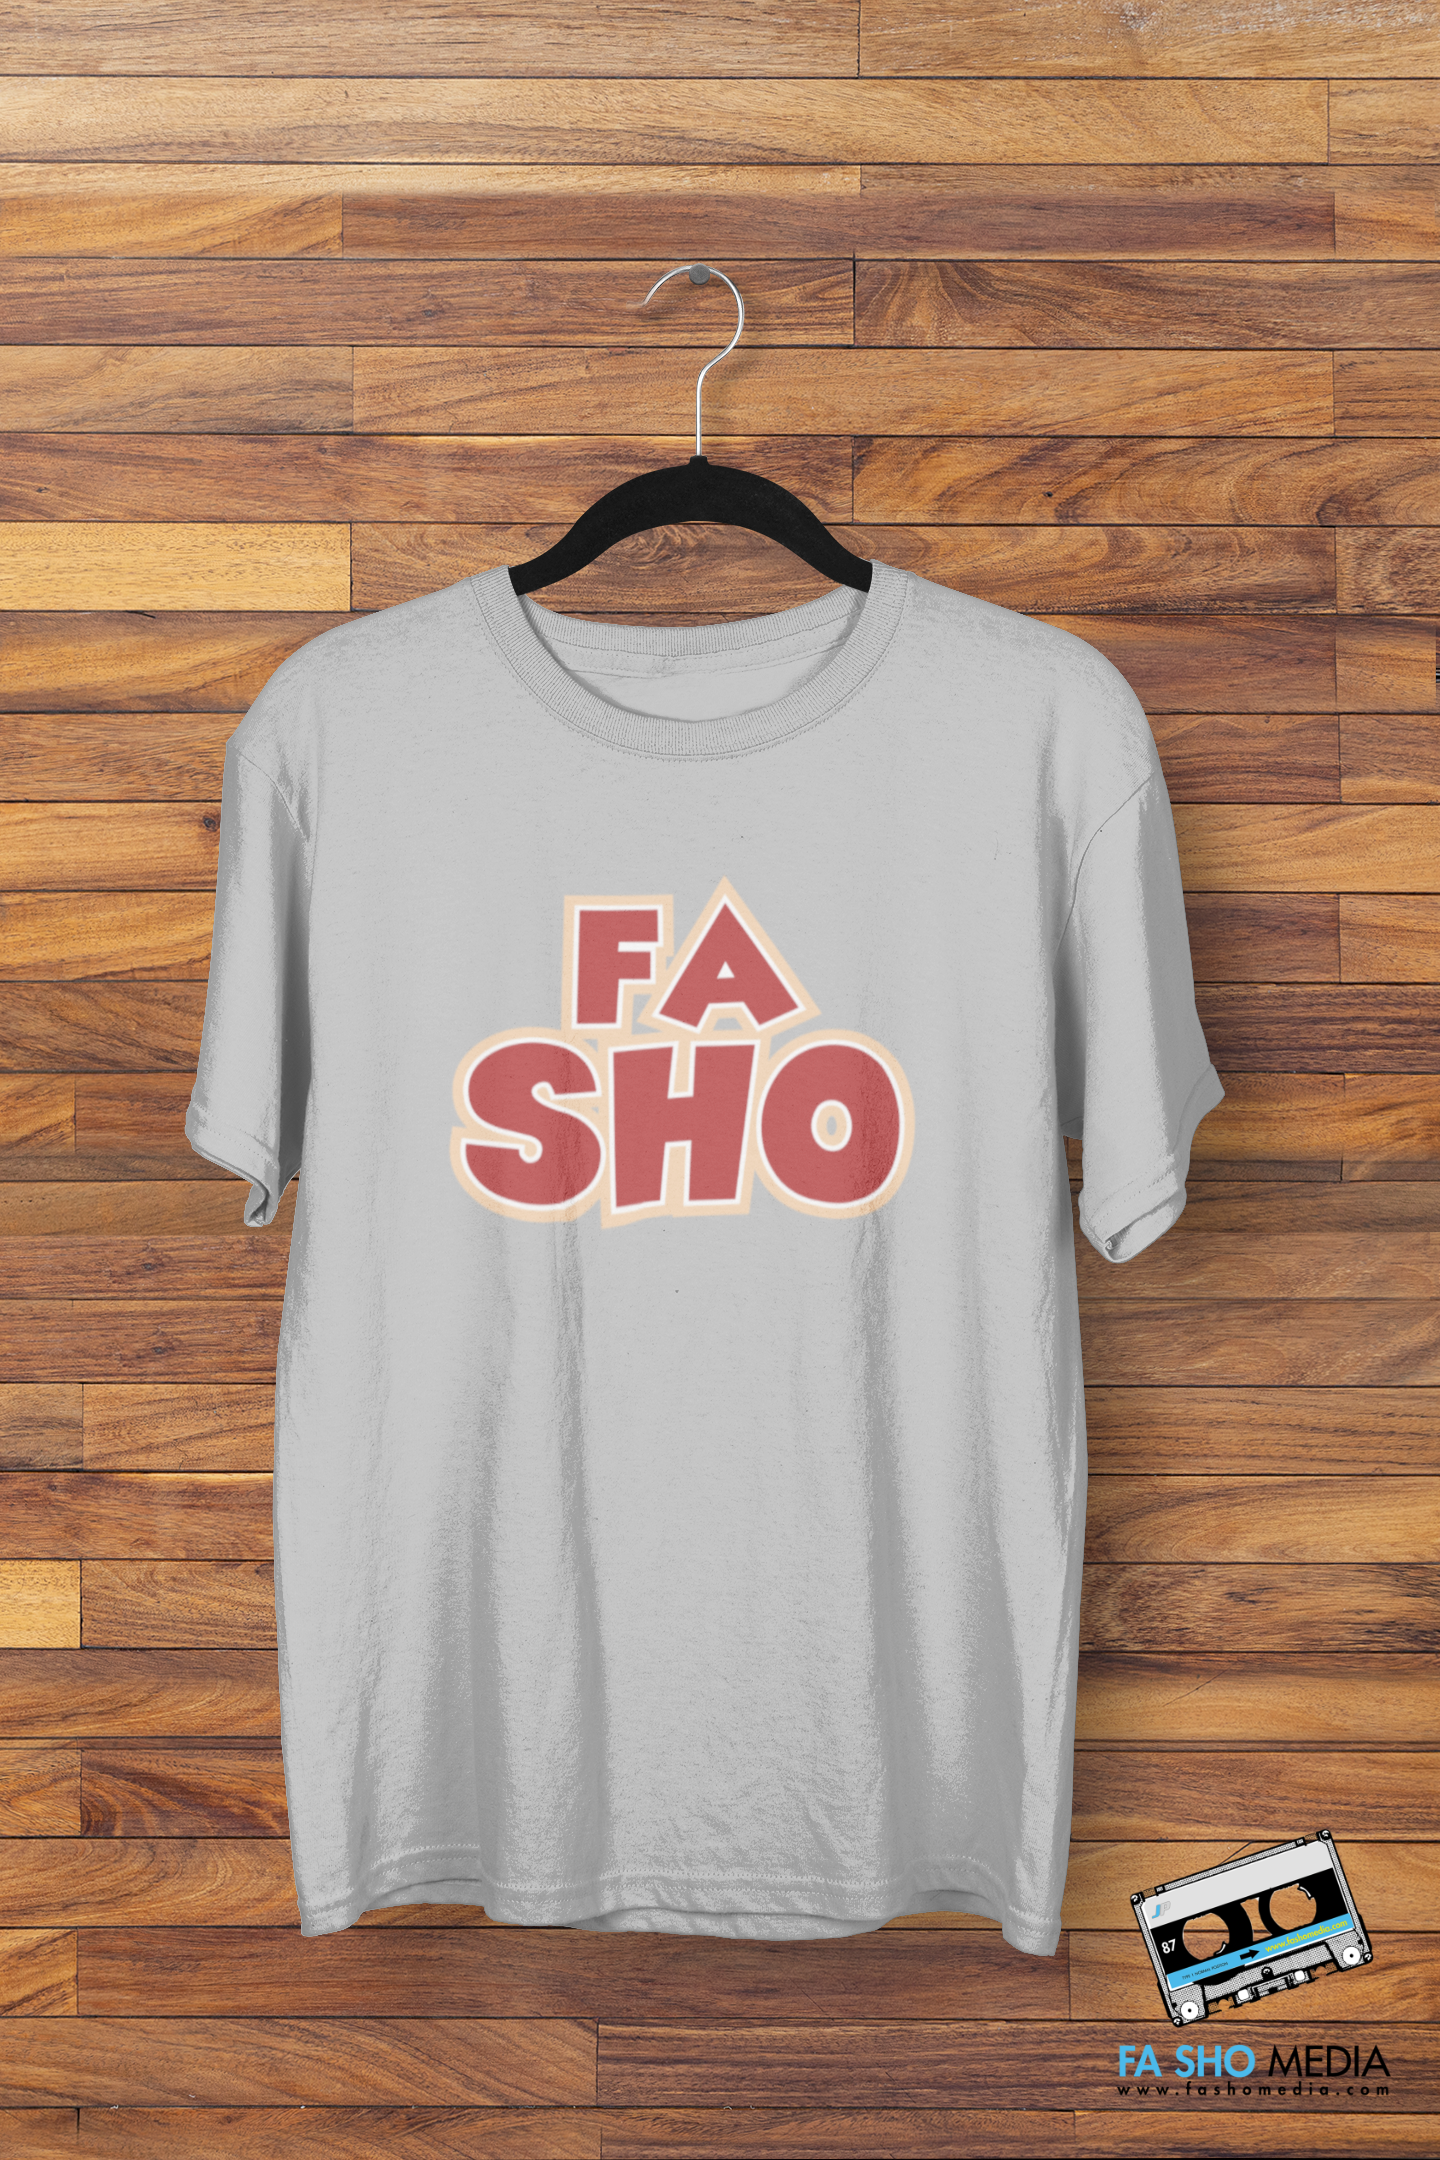 Fa Sho Graffiti Shirt (Men's)